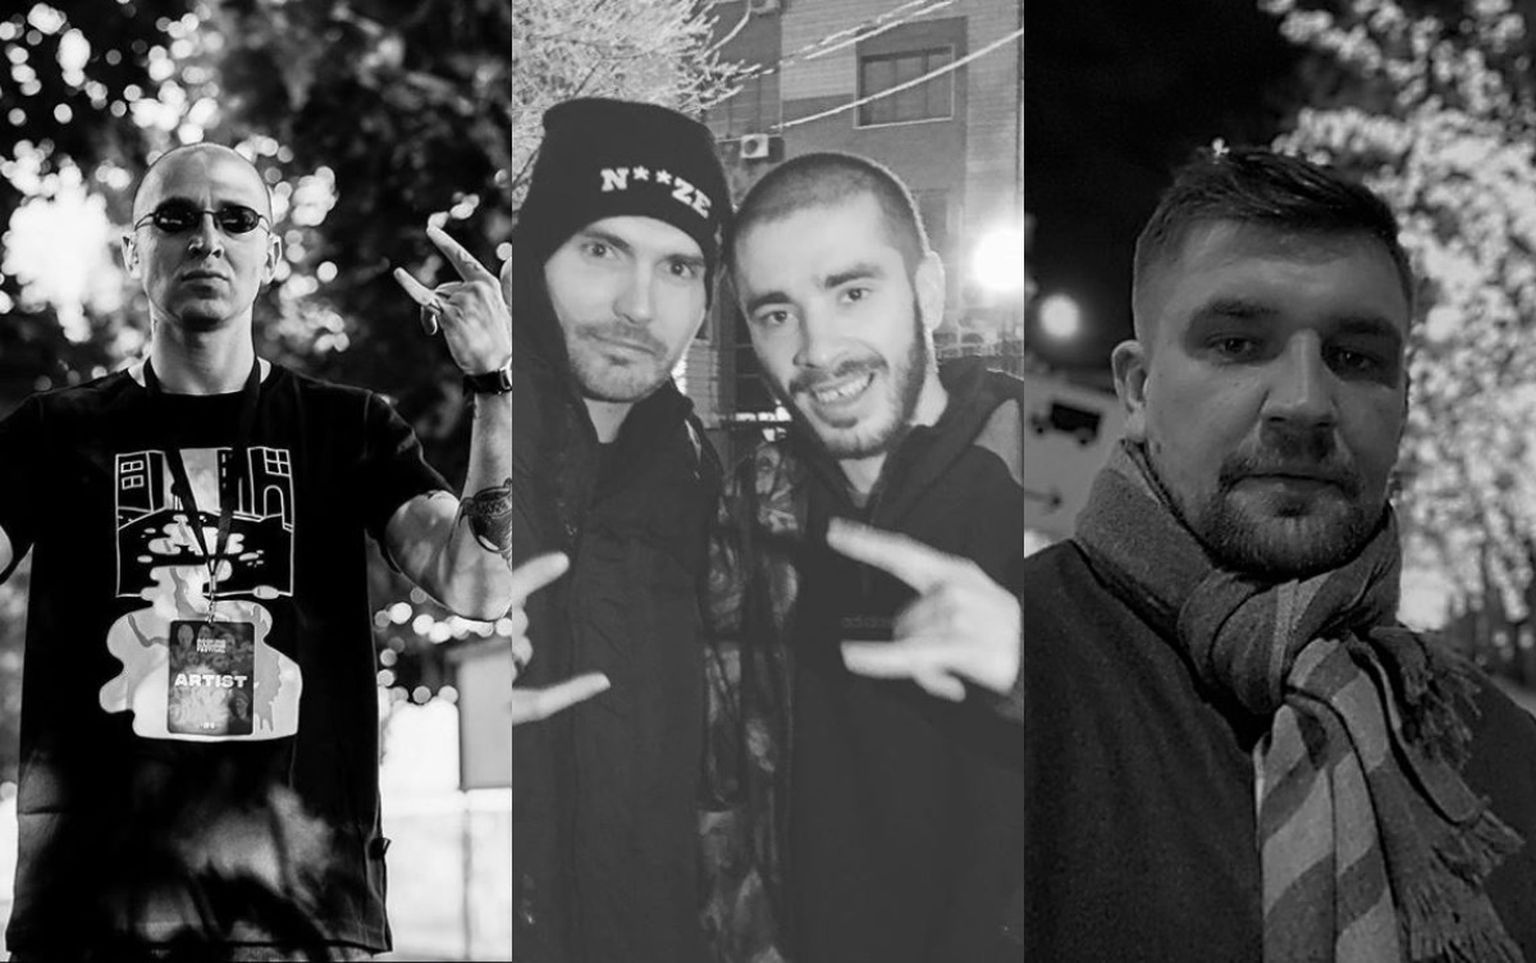 Оксимирон, Noize MC, Хаски и Баста